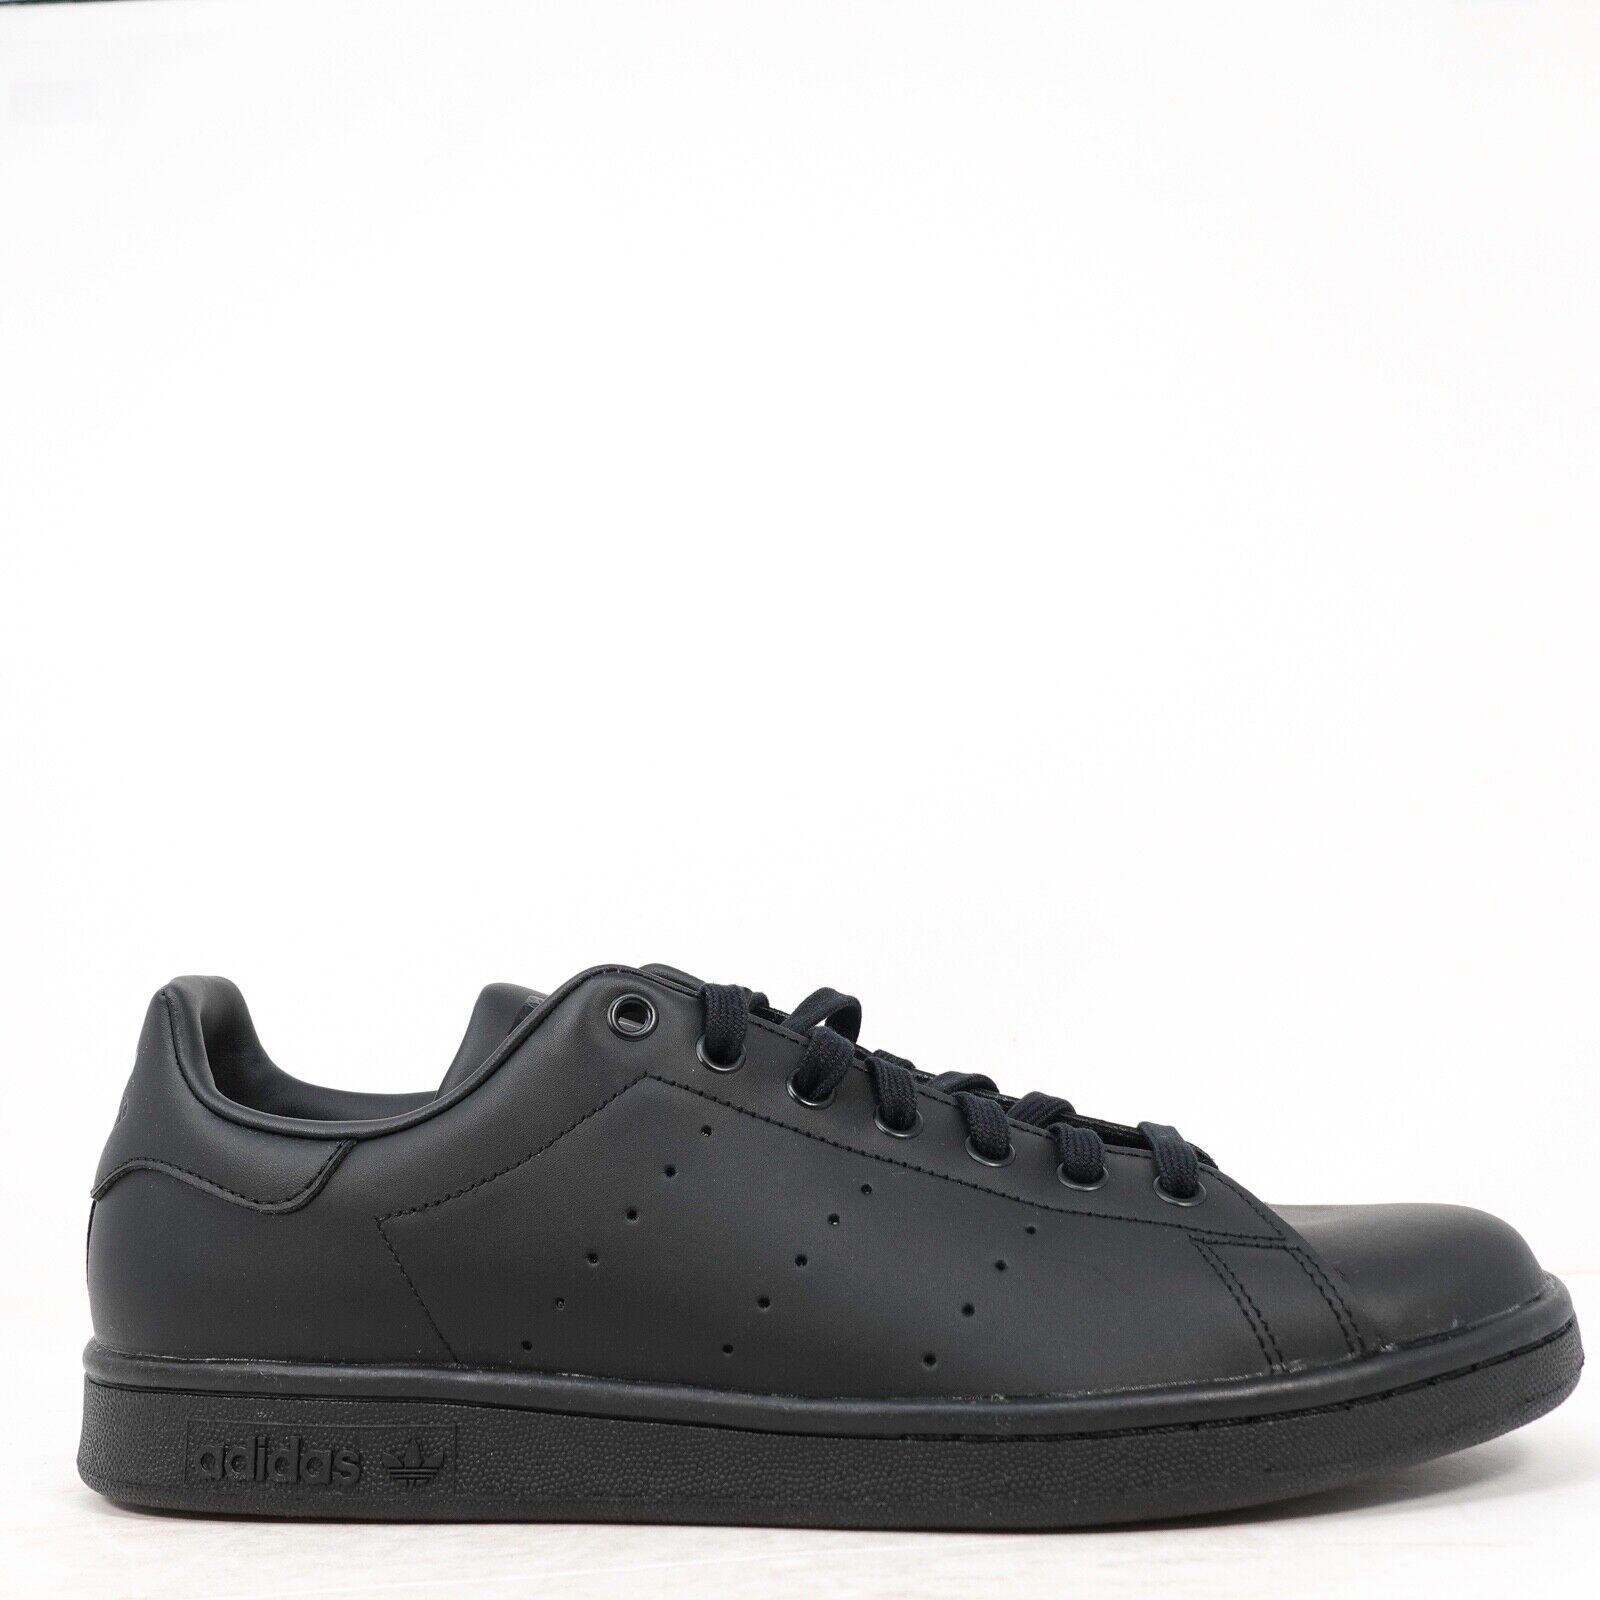 Adidas Stan Smith Black Sneaker Shoes Mens Size 11.5 | eBay